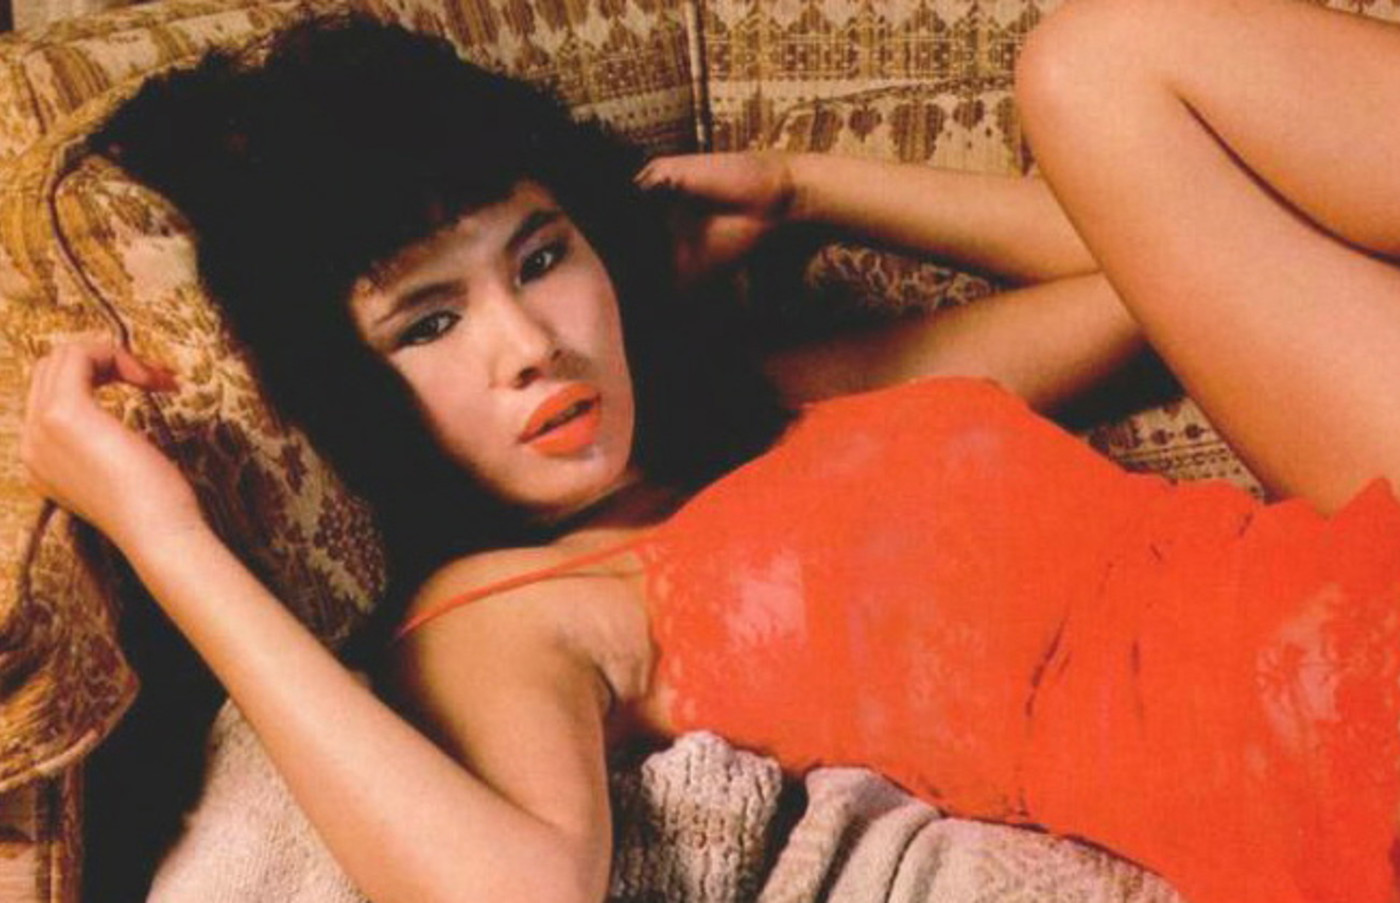 Oriental Porn Stars 80s - 80s Asian Porn Star Blonde Sex Pict...